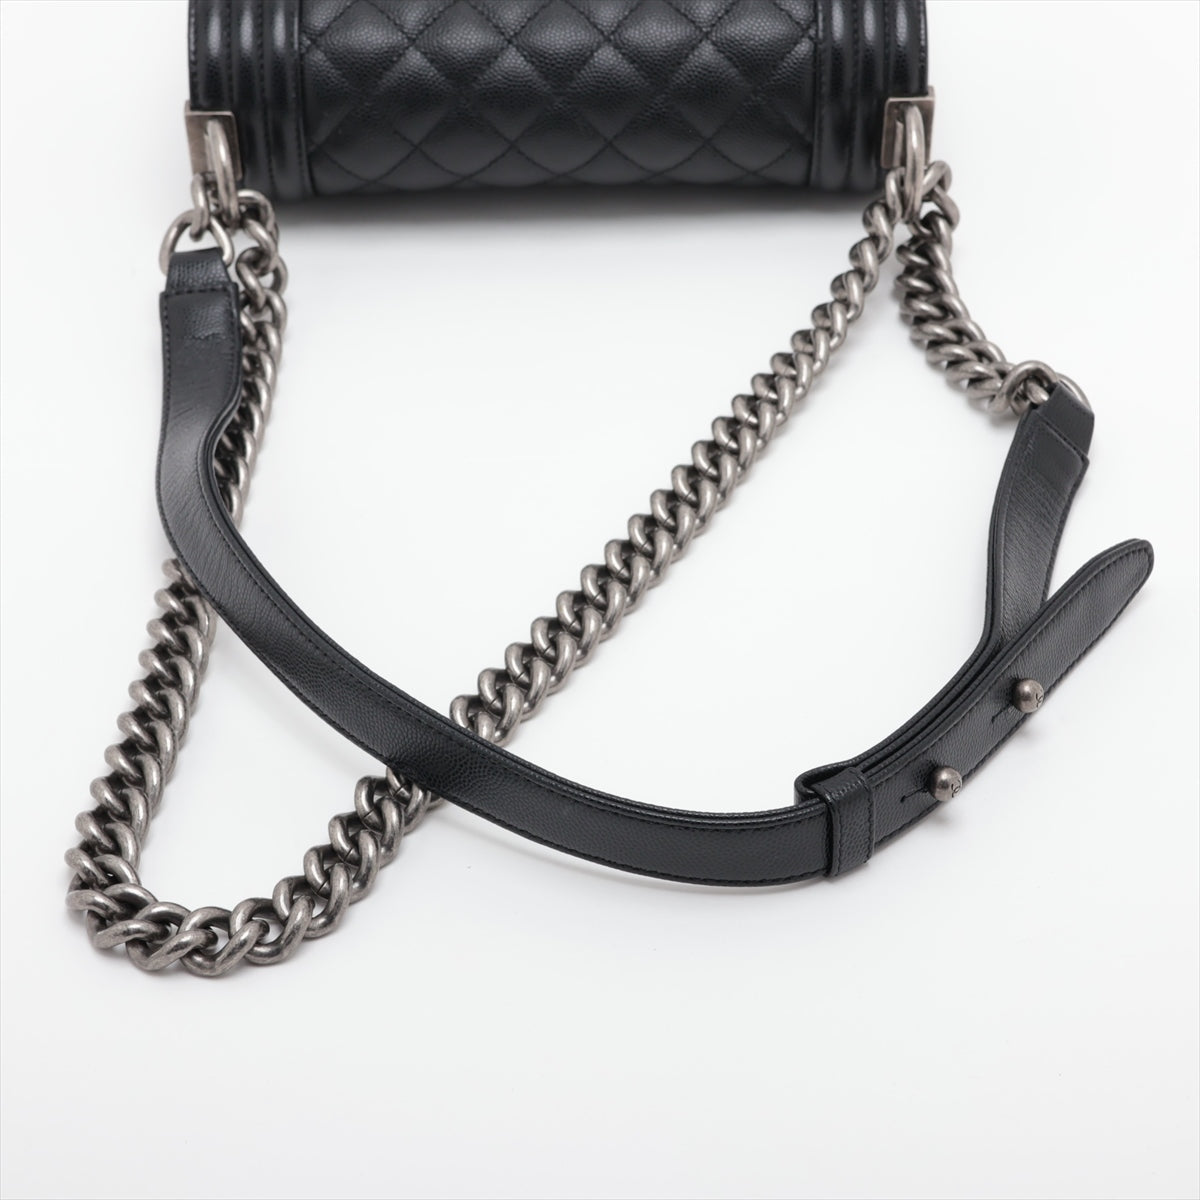 Chanel Boy Chanel 20 Small Caviar Skin Chain Shoulder Bag Black Silver Metal Fittings 28th A67085